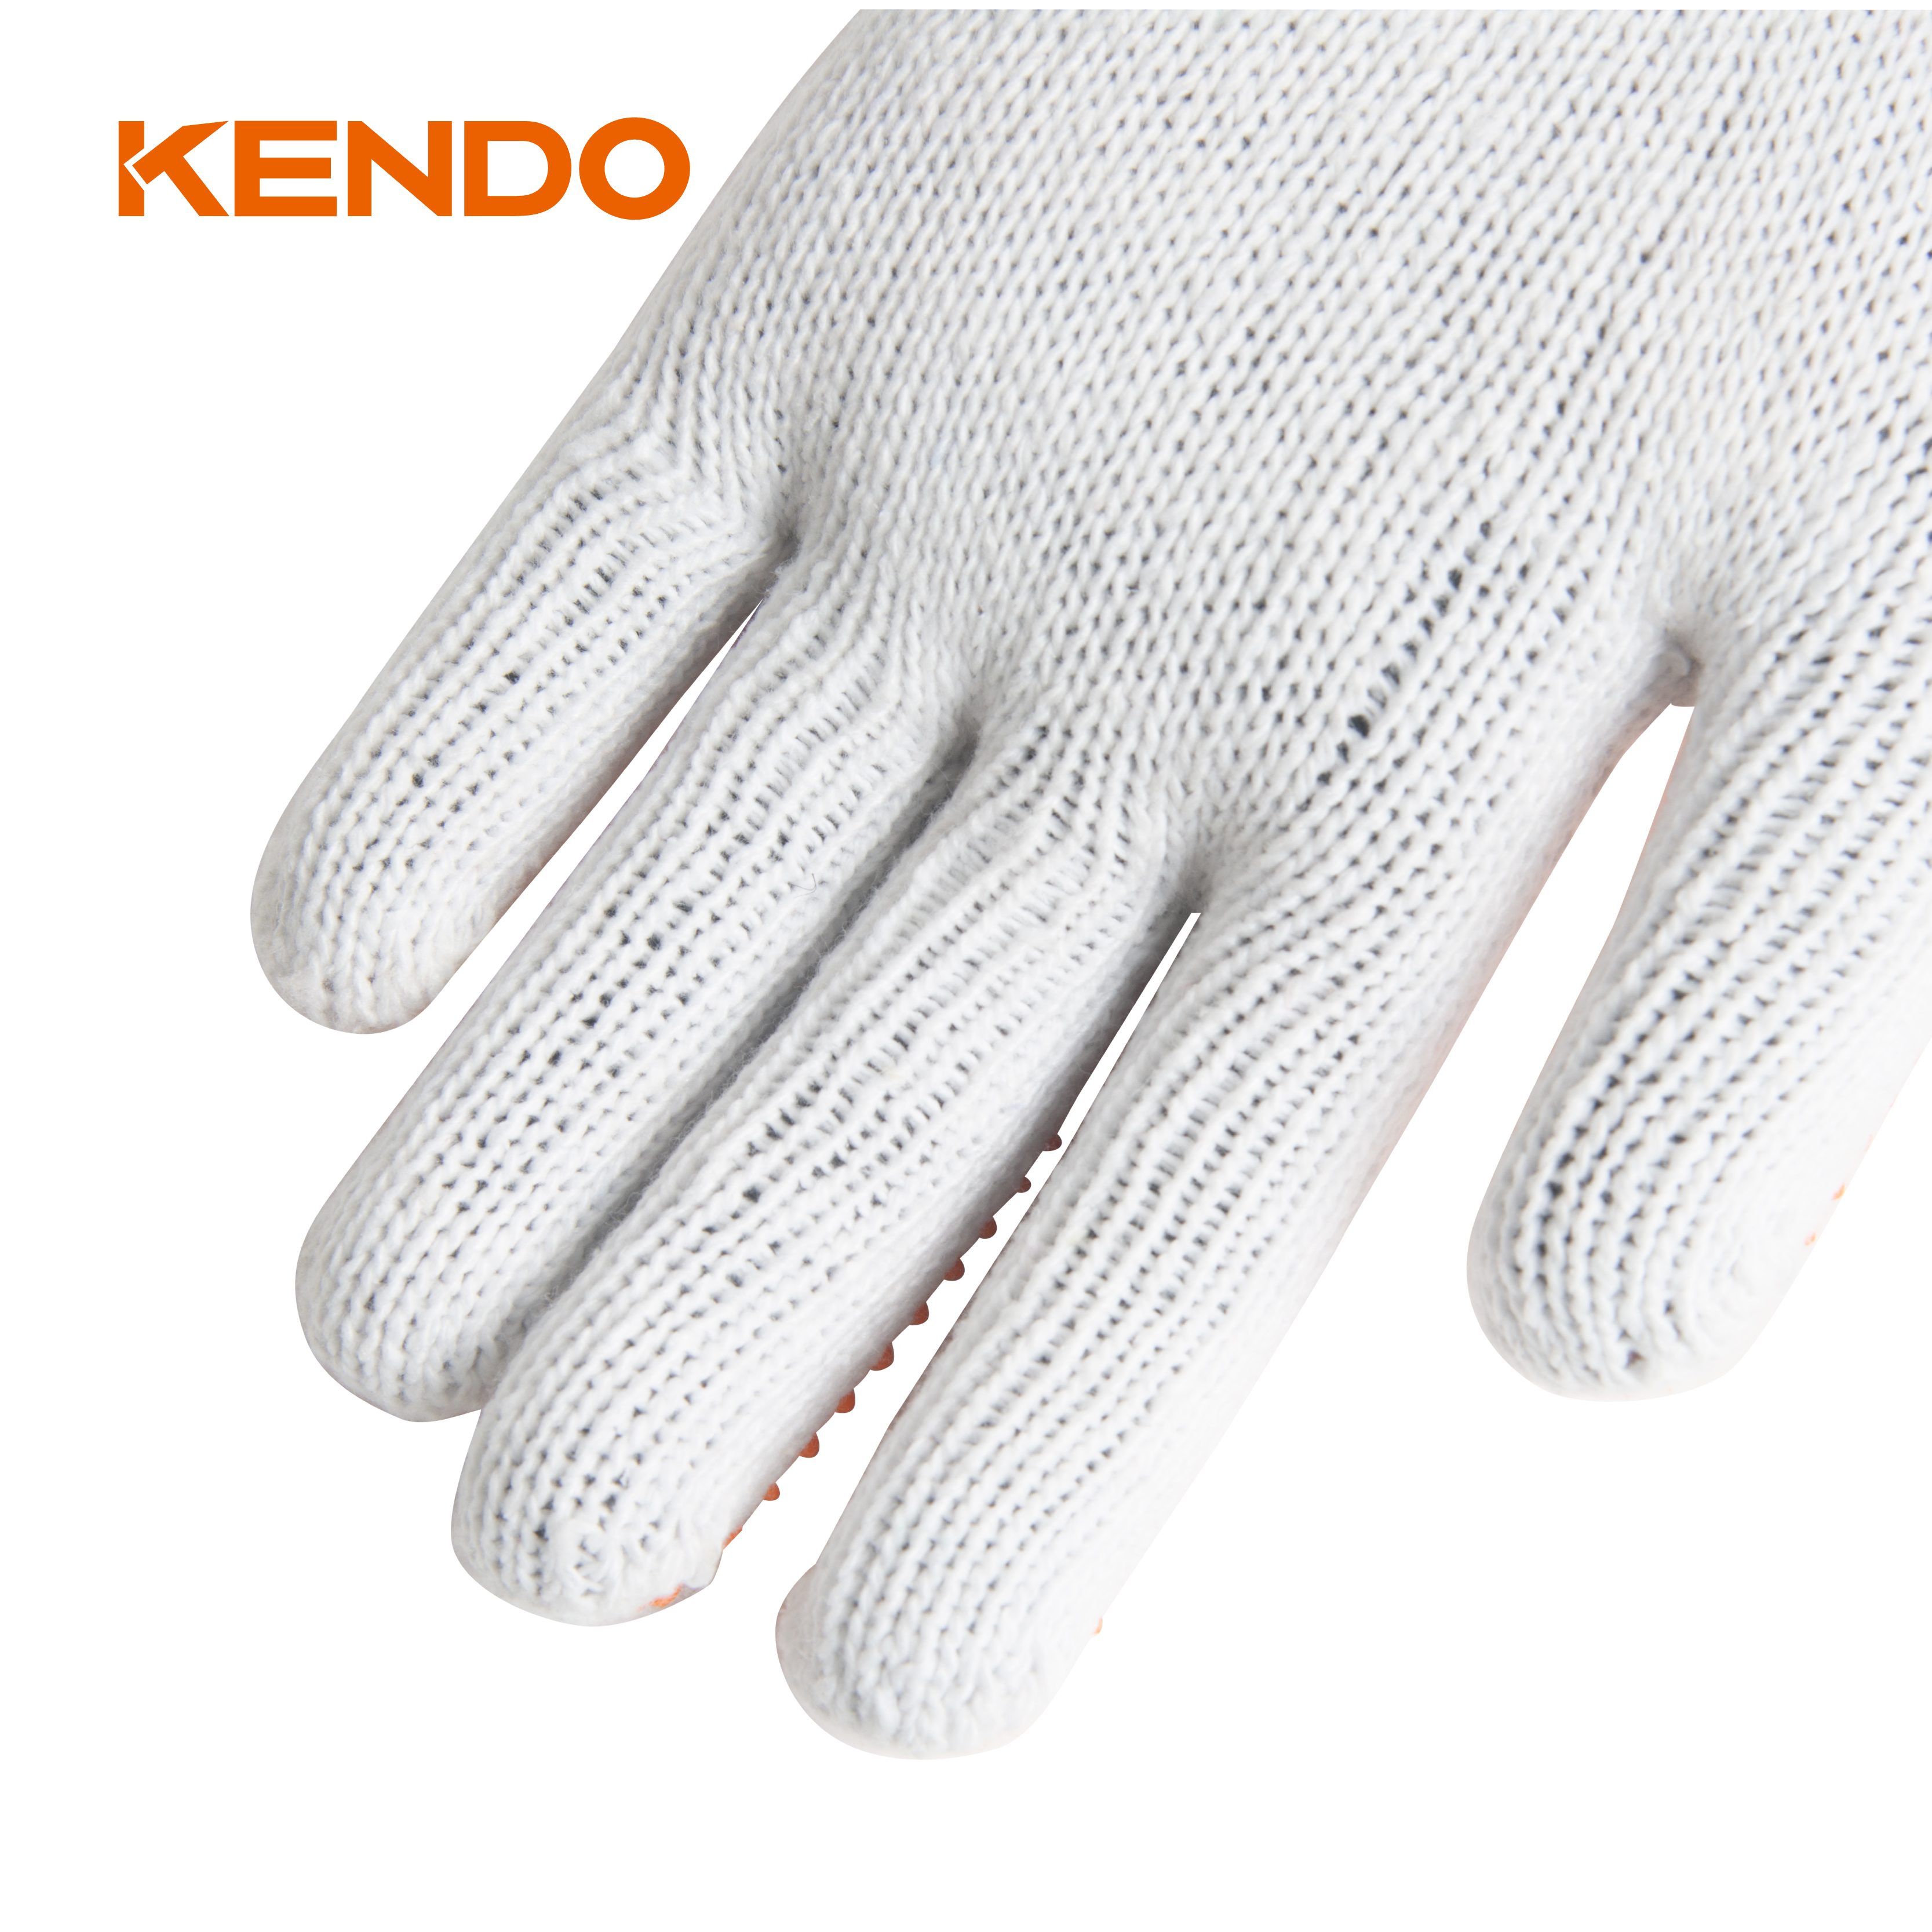 Handschuhe Strick-PVC Dot